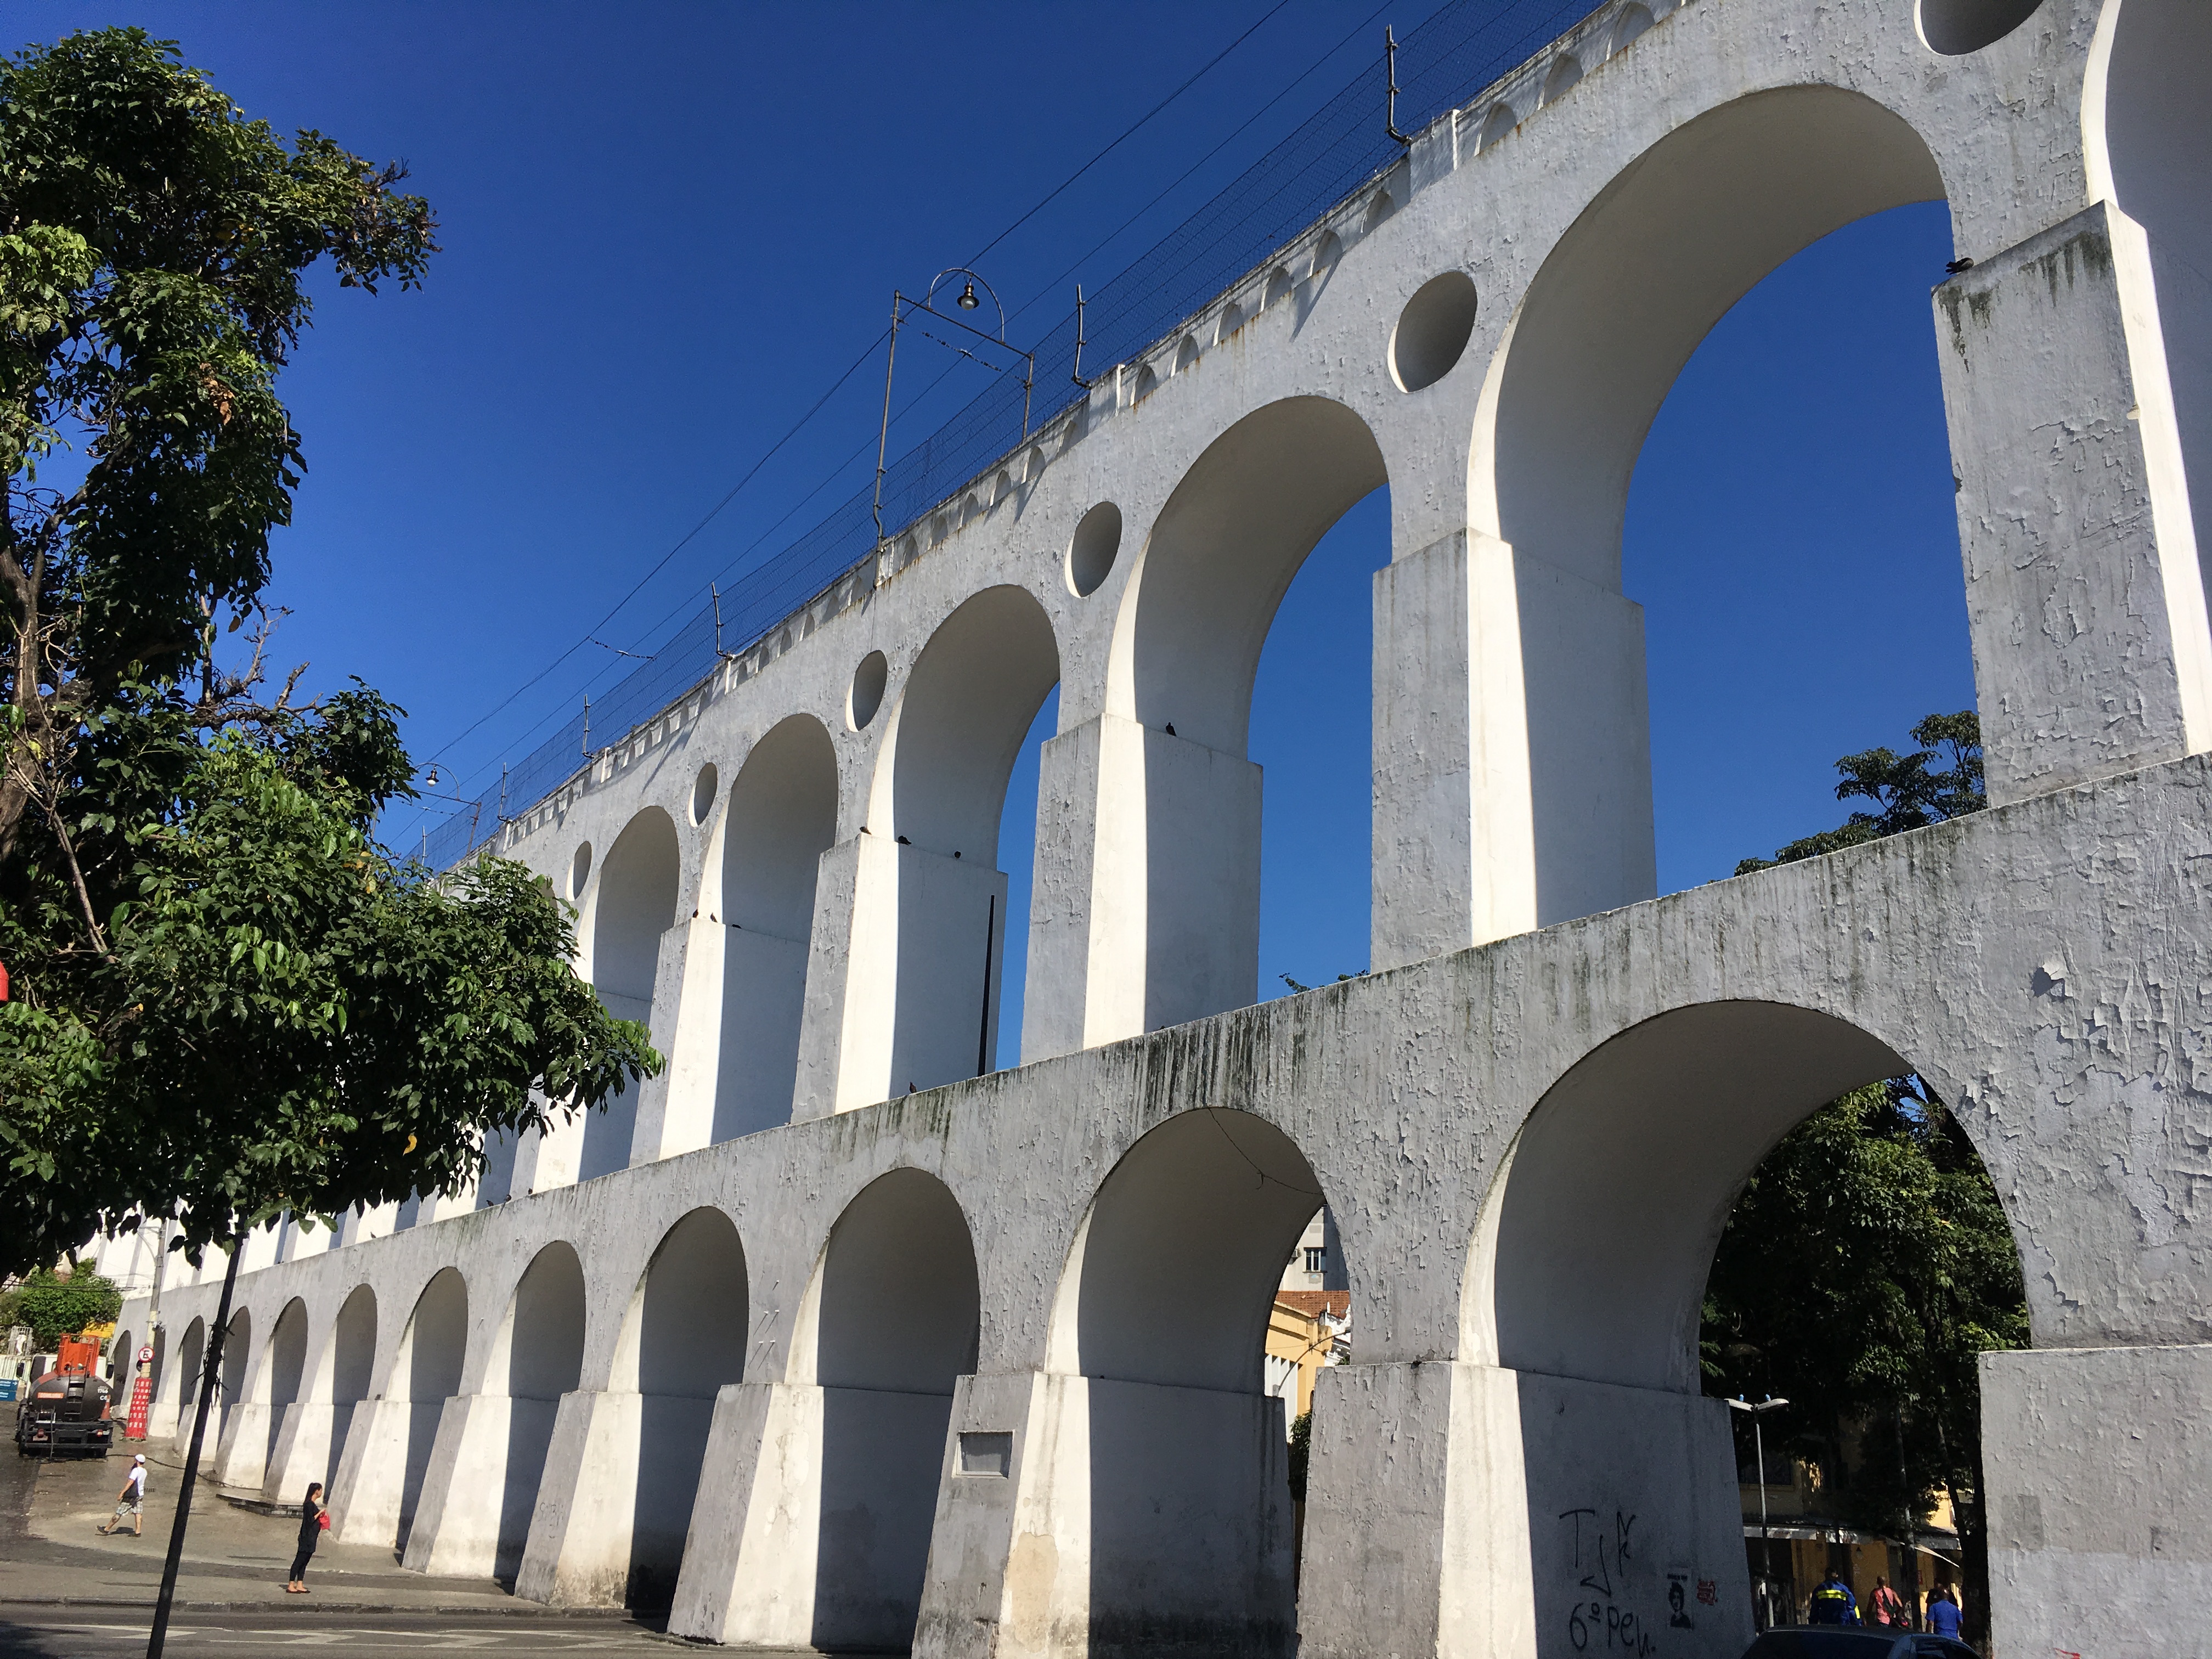 The Lapa Arches - a striking 18th century aqueduct, Rio de Janeiro, Brazil